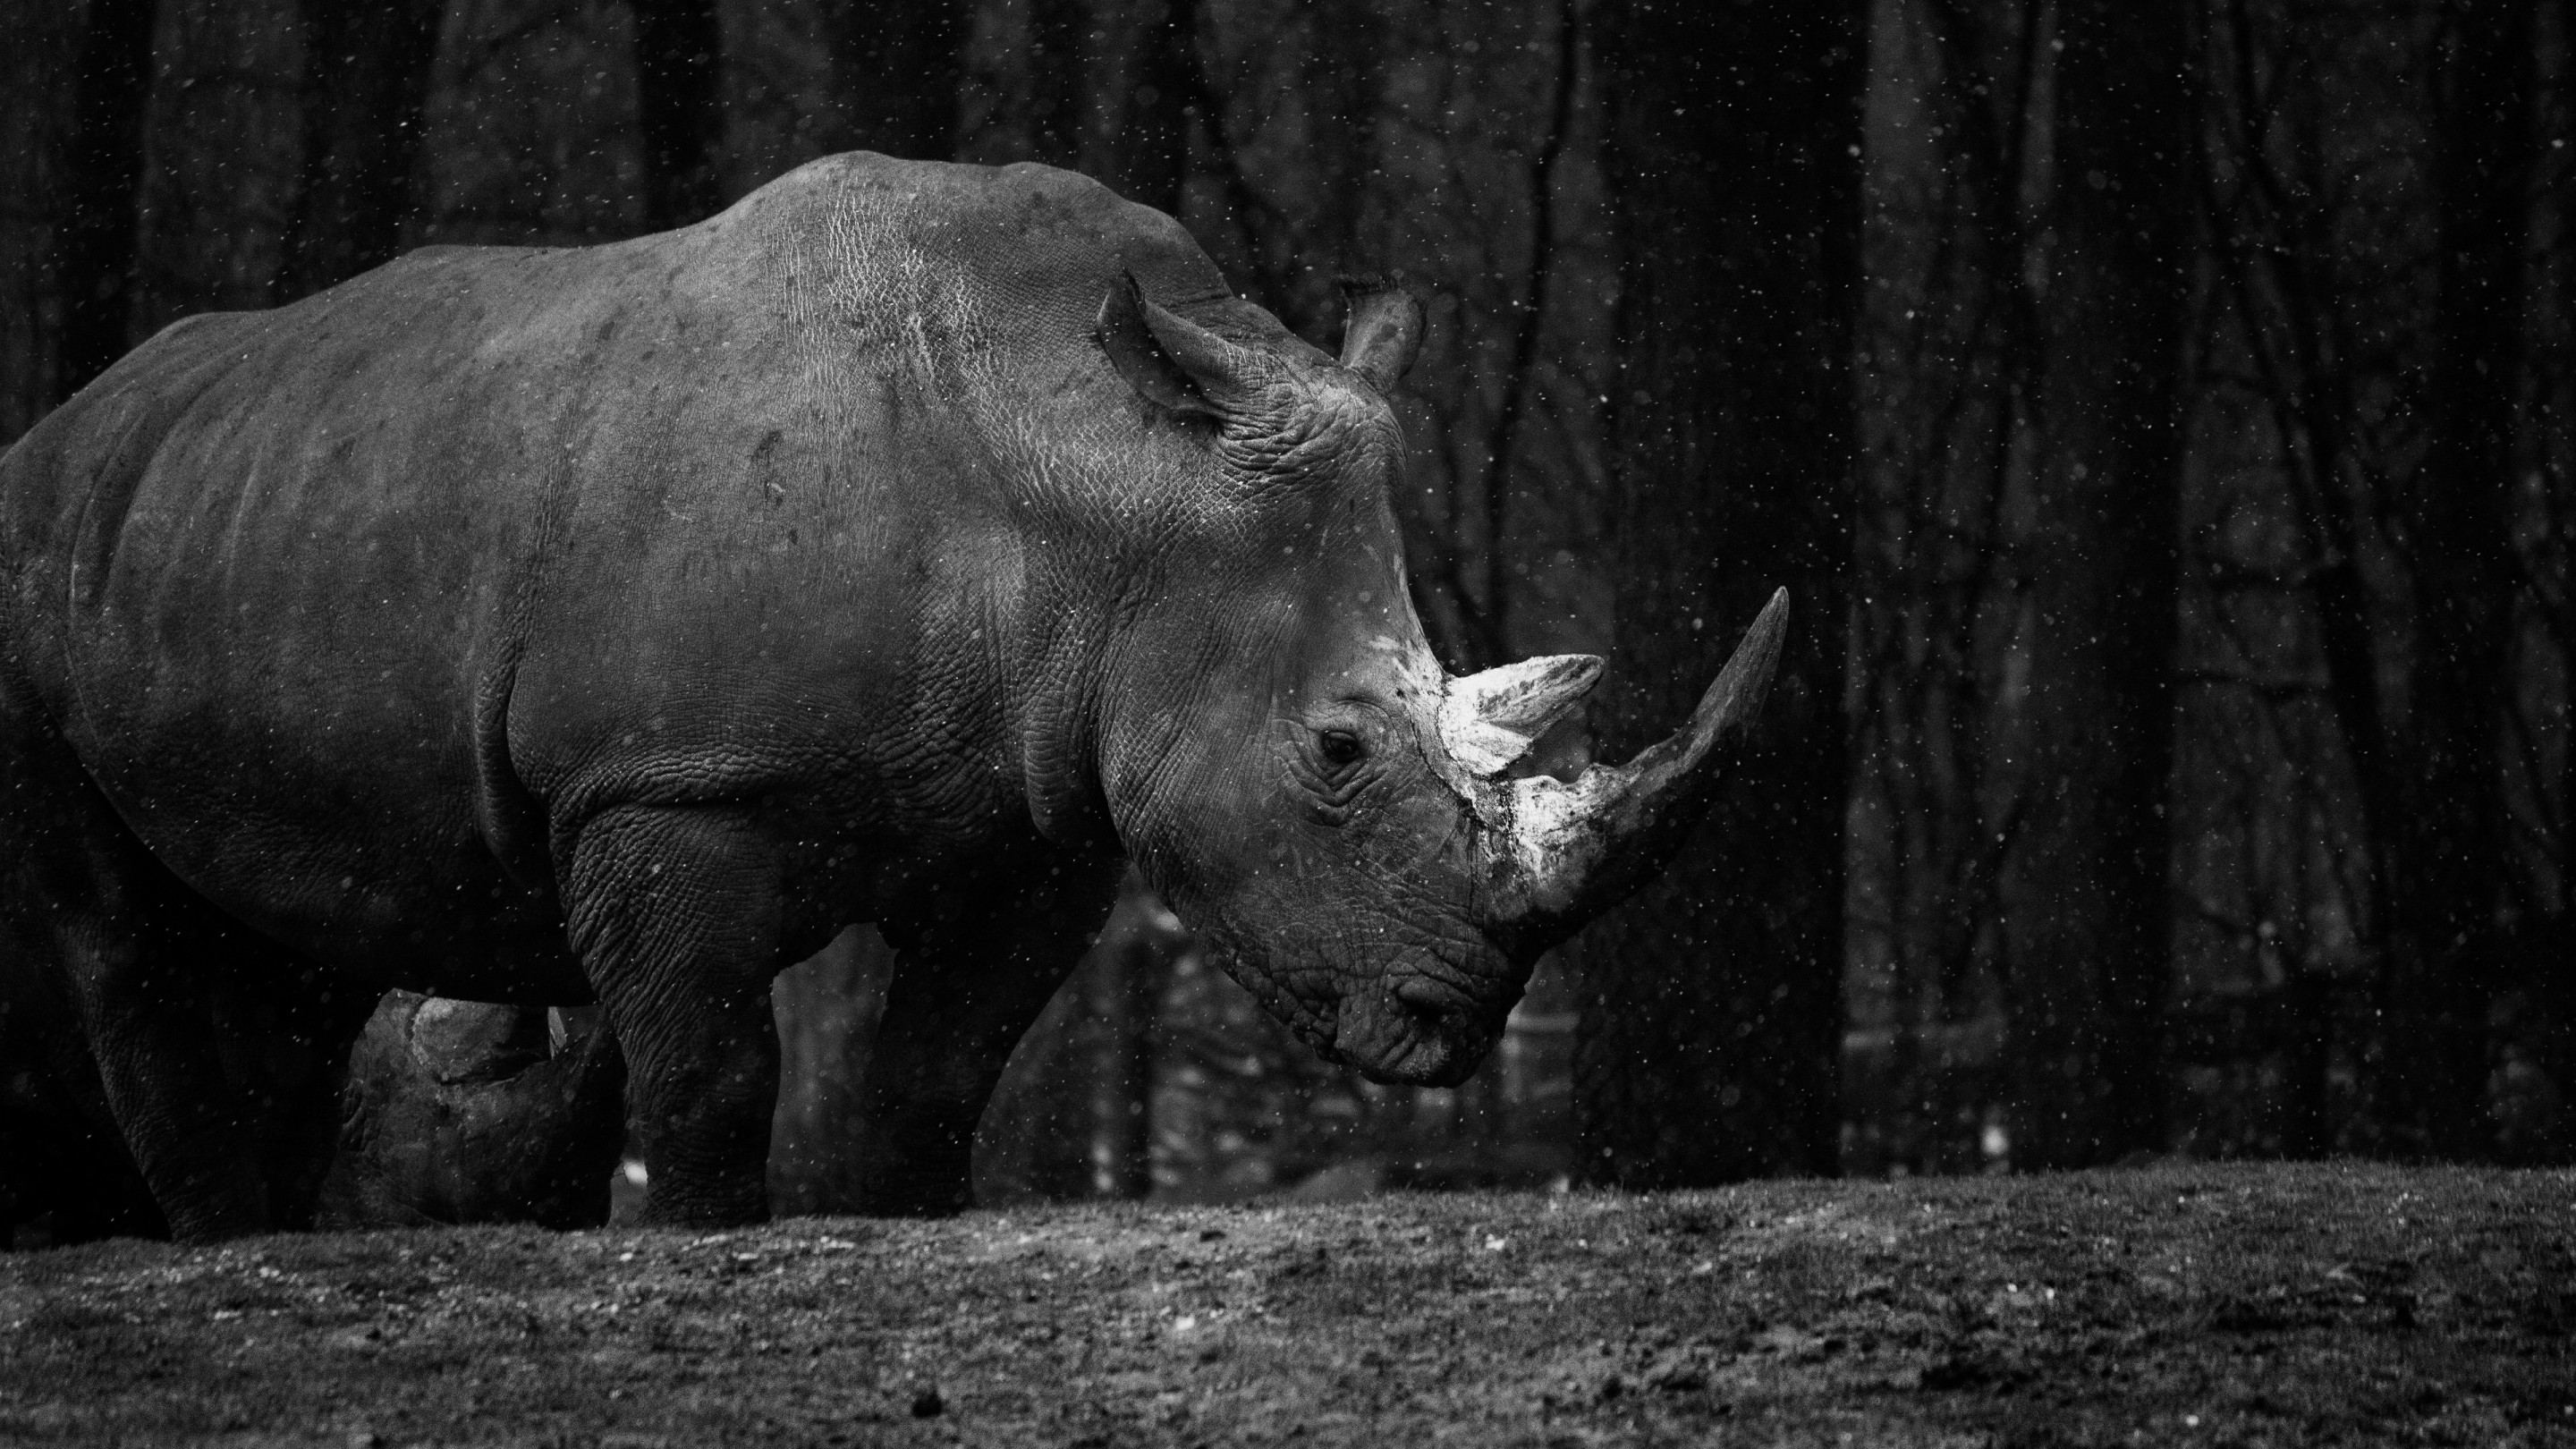 Rhino at zoo wallpaper 2880x1620